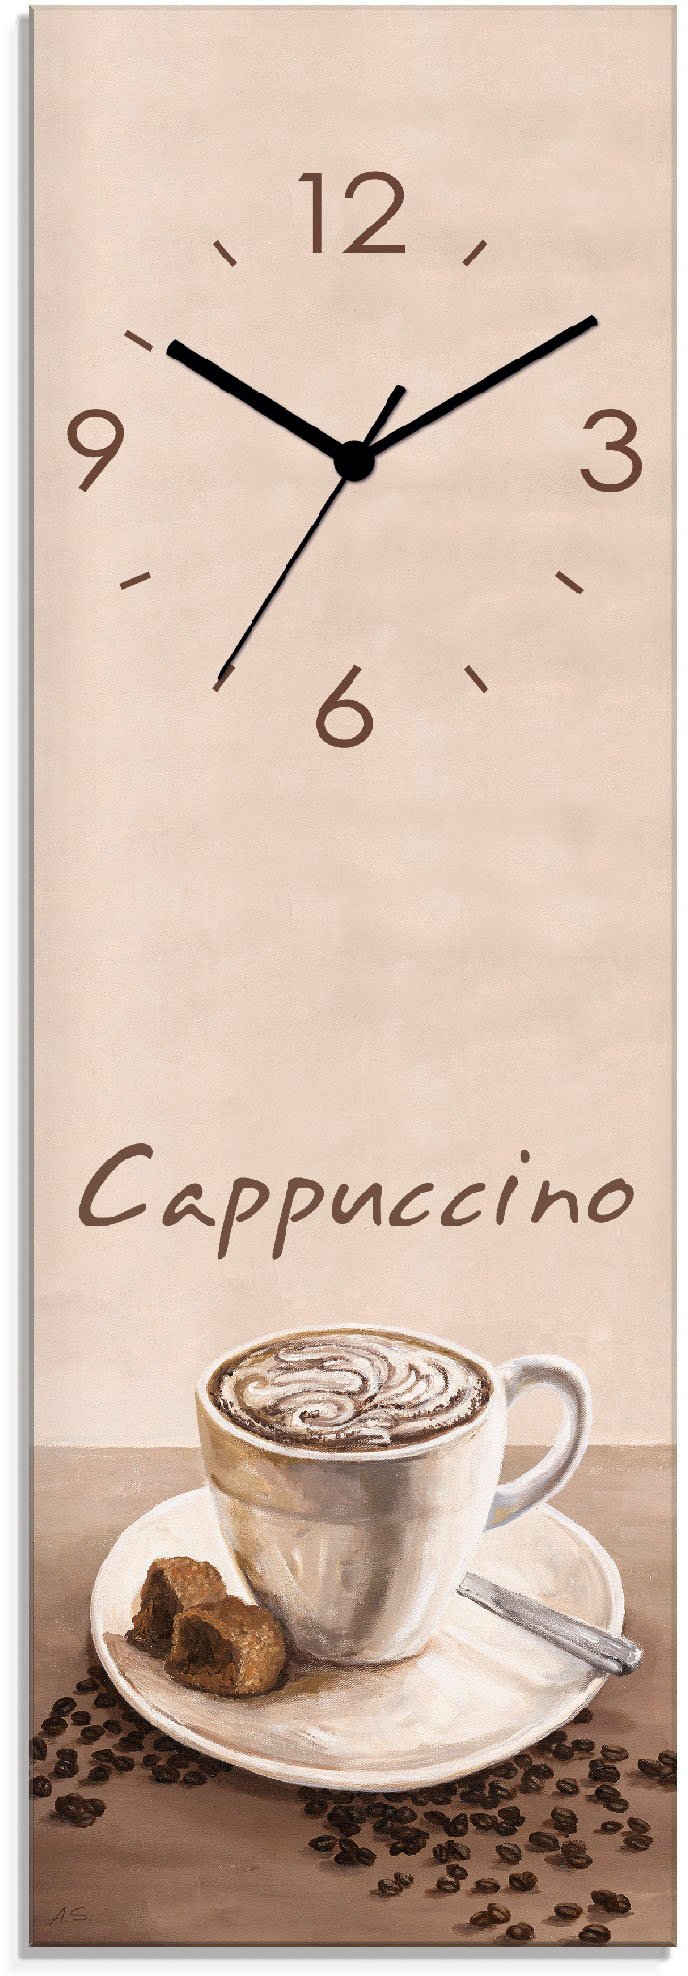 Artland Wanduhr Cappuccino - Kaffee (wahlweise mit Quarz- oder Funhuhrwerk, lautlos ohne Tickgeräusche)